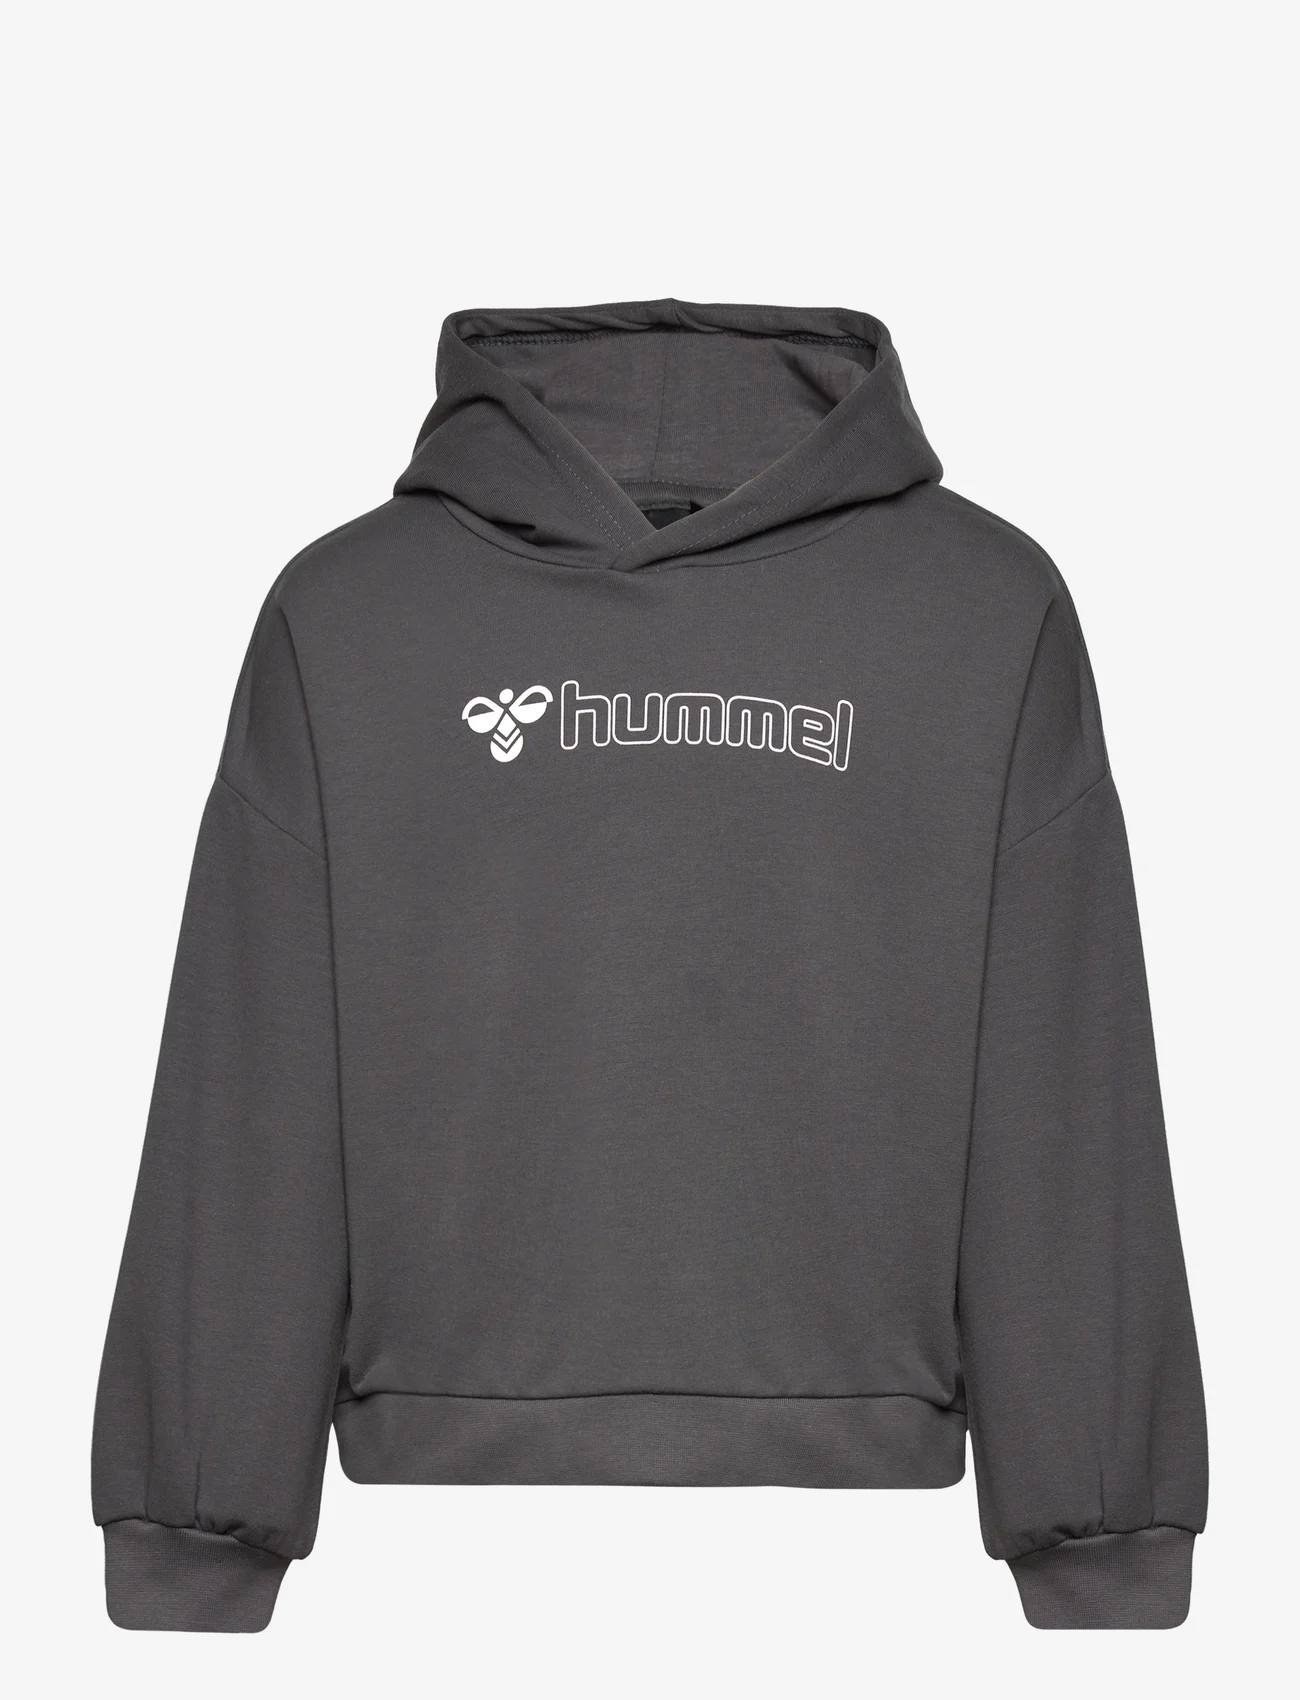 Hummel - hmlOCTOVA HOODIE - sweatshirts & hoodies - asphalt - 0